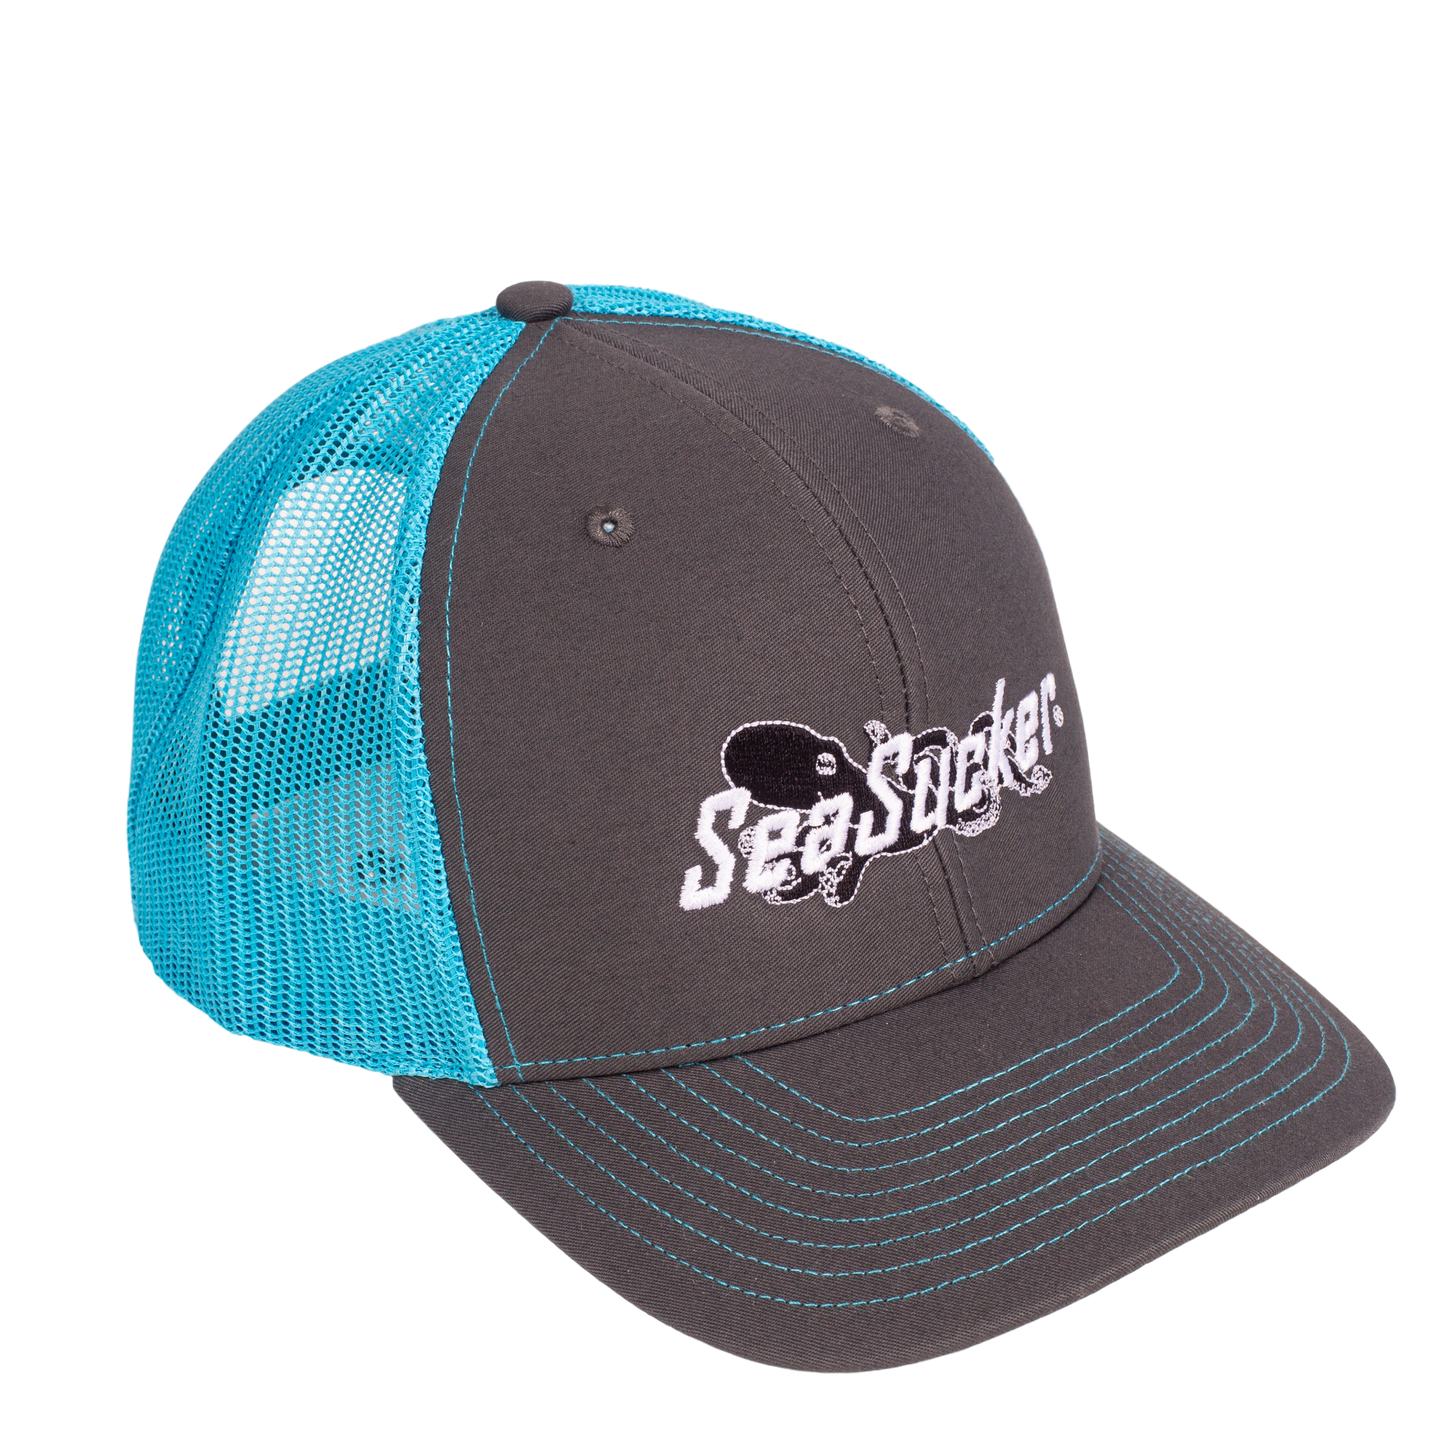 SeaSucker Logo Trucker Hat